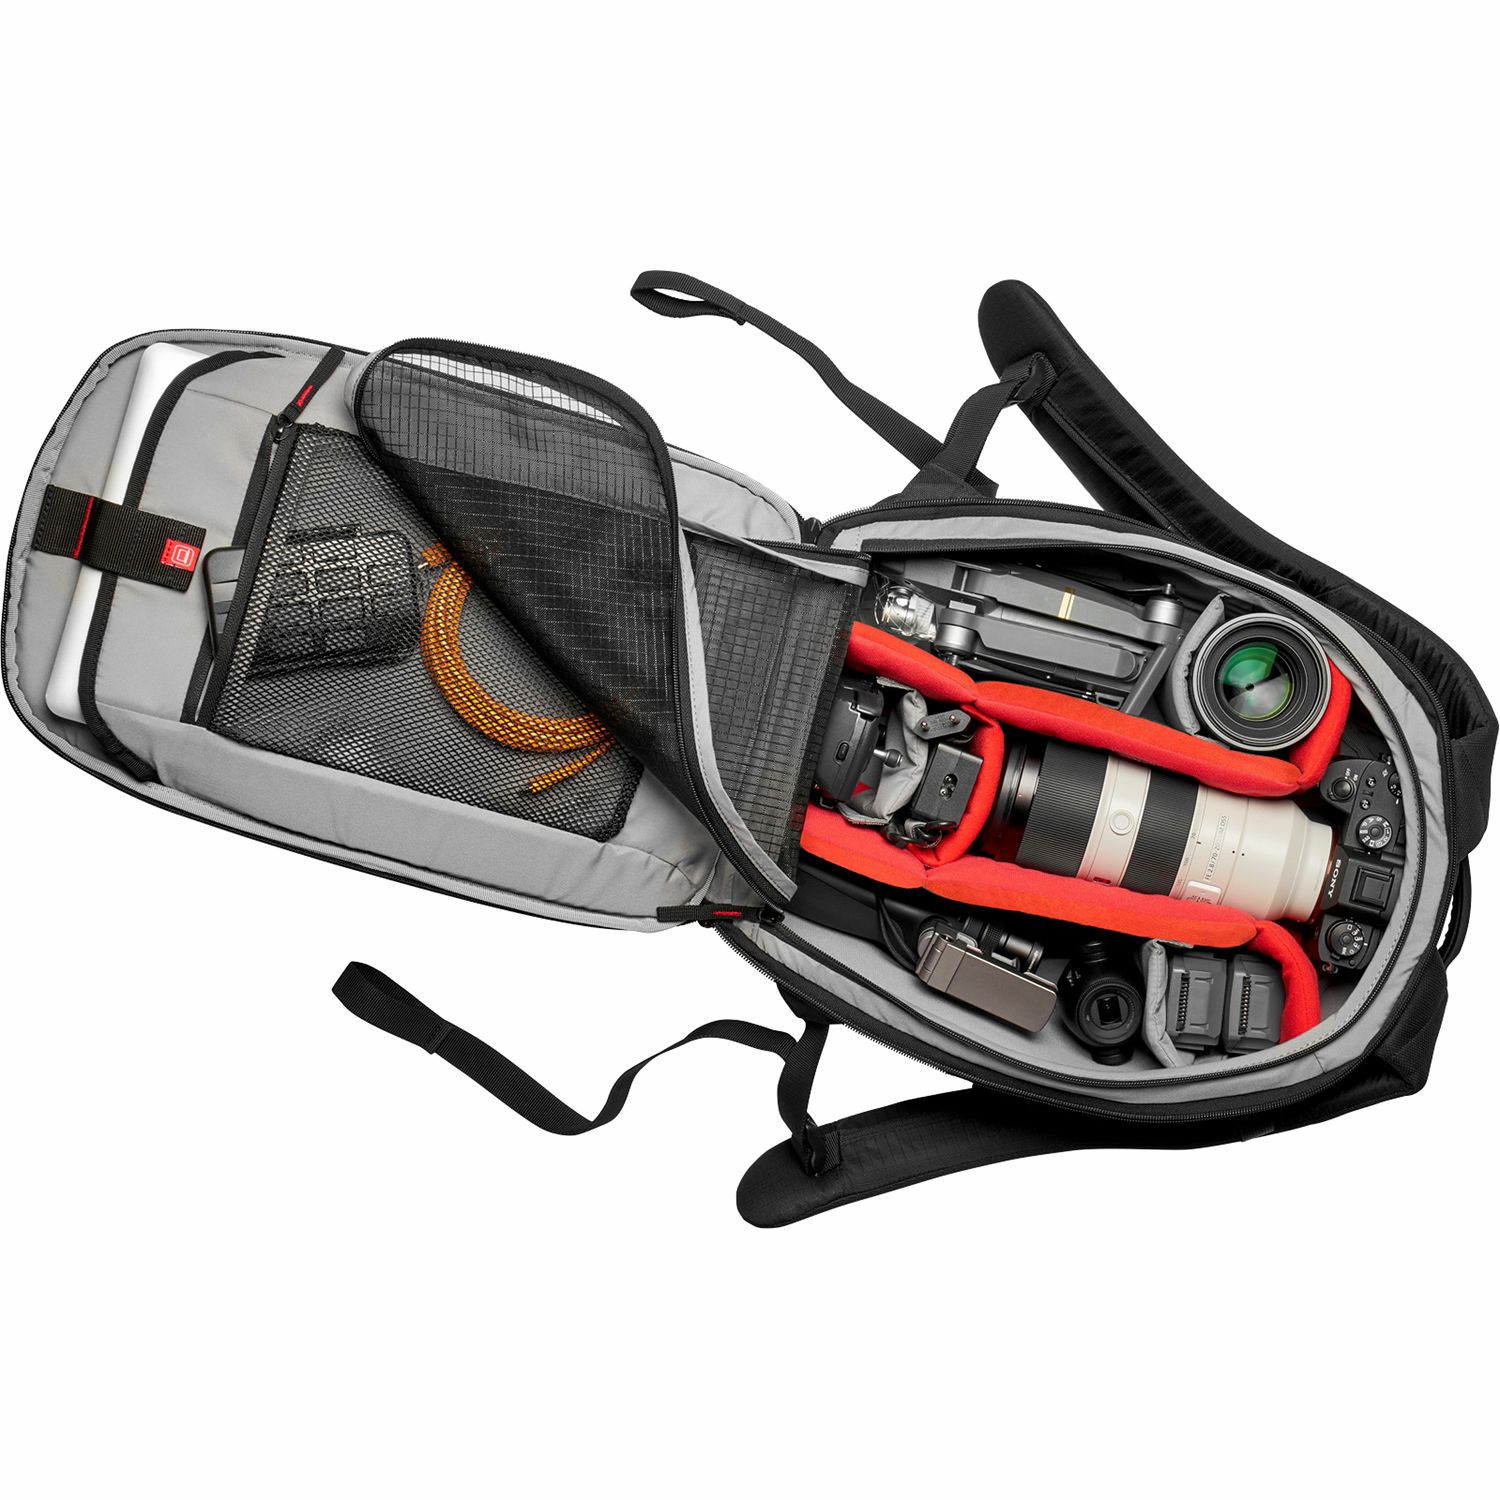 Manfrotto Pro Light RedBee-110 backpack for CSC - 15L ruksak za fotoaparat i foto opremu (MB PL-BP-R-110)